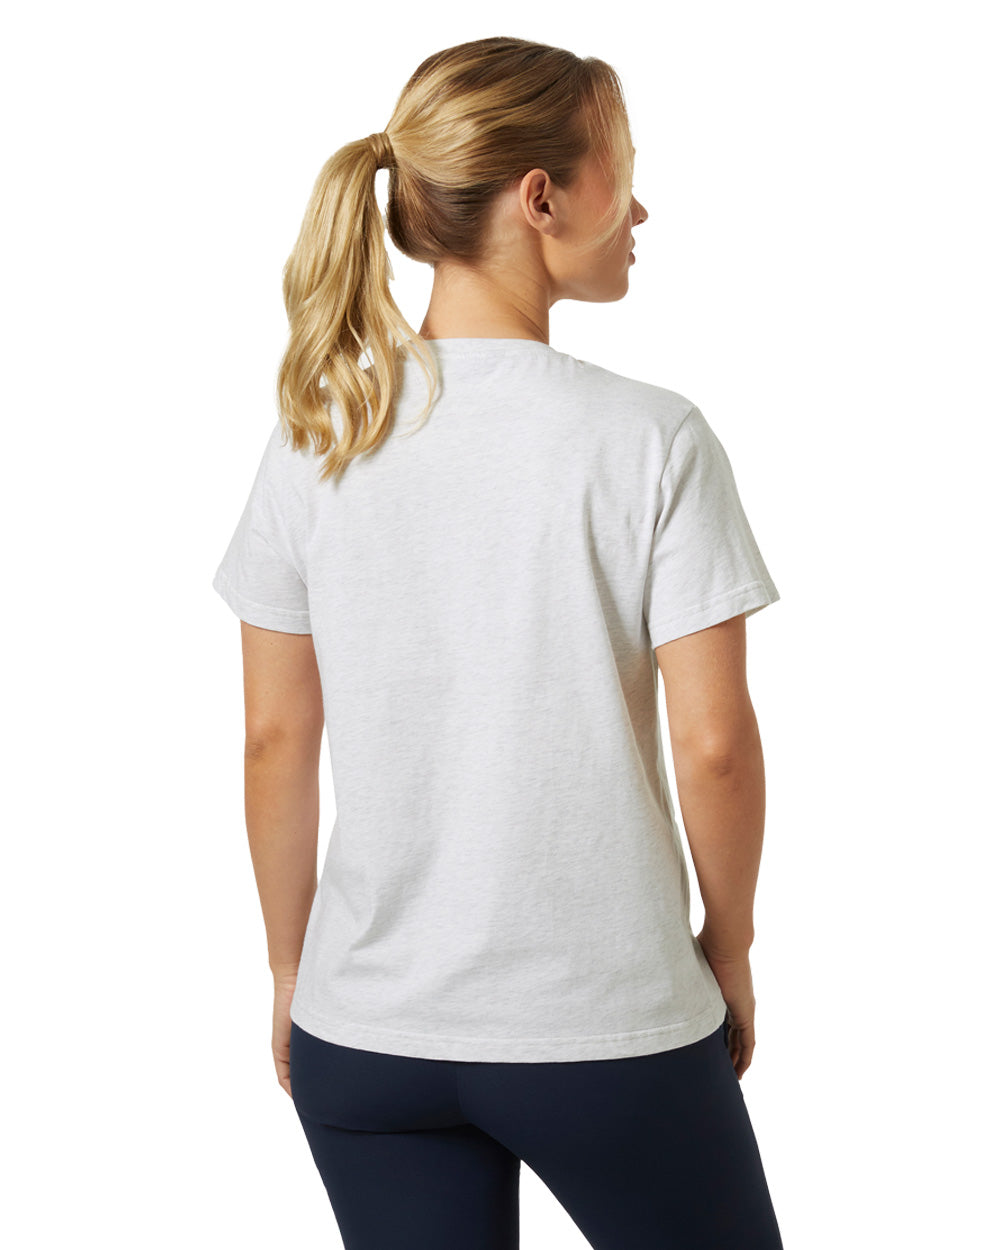 Nimbus Cloud Melange coloured Helly Hansen Womens T-Shirt on white background 